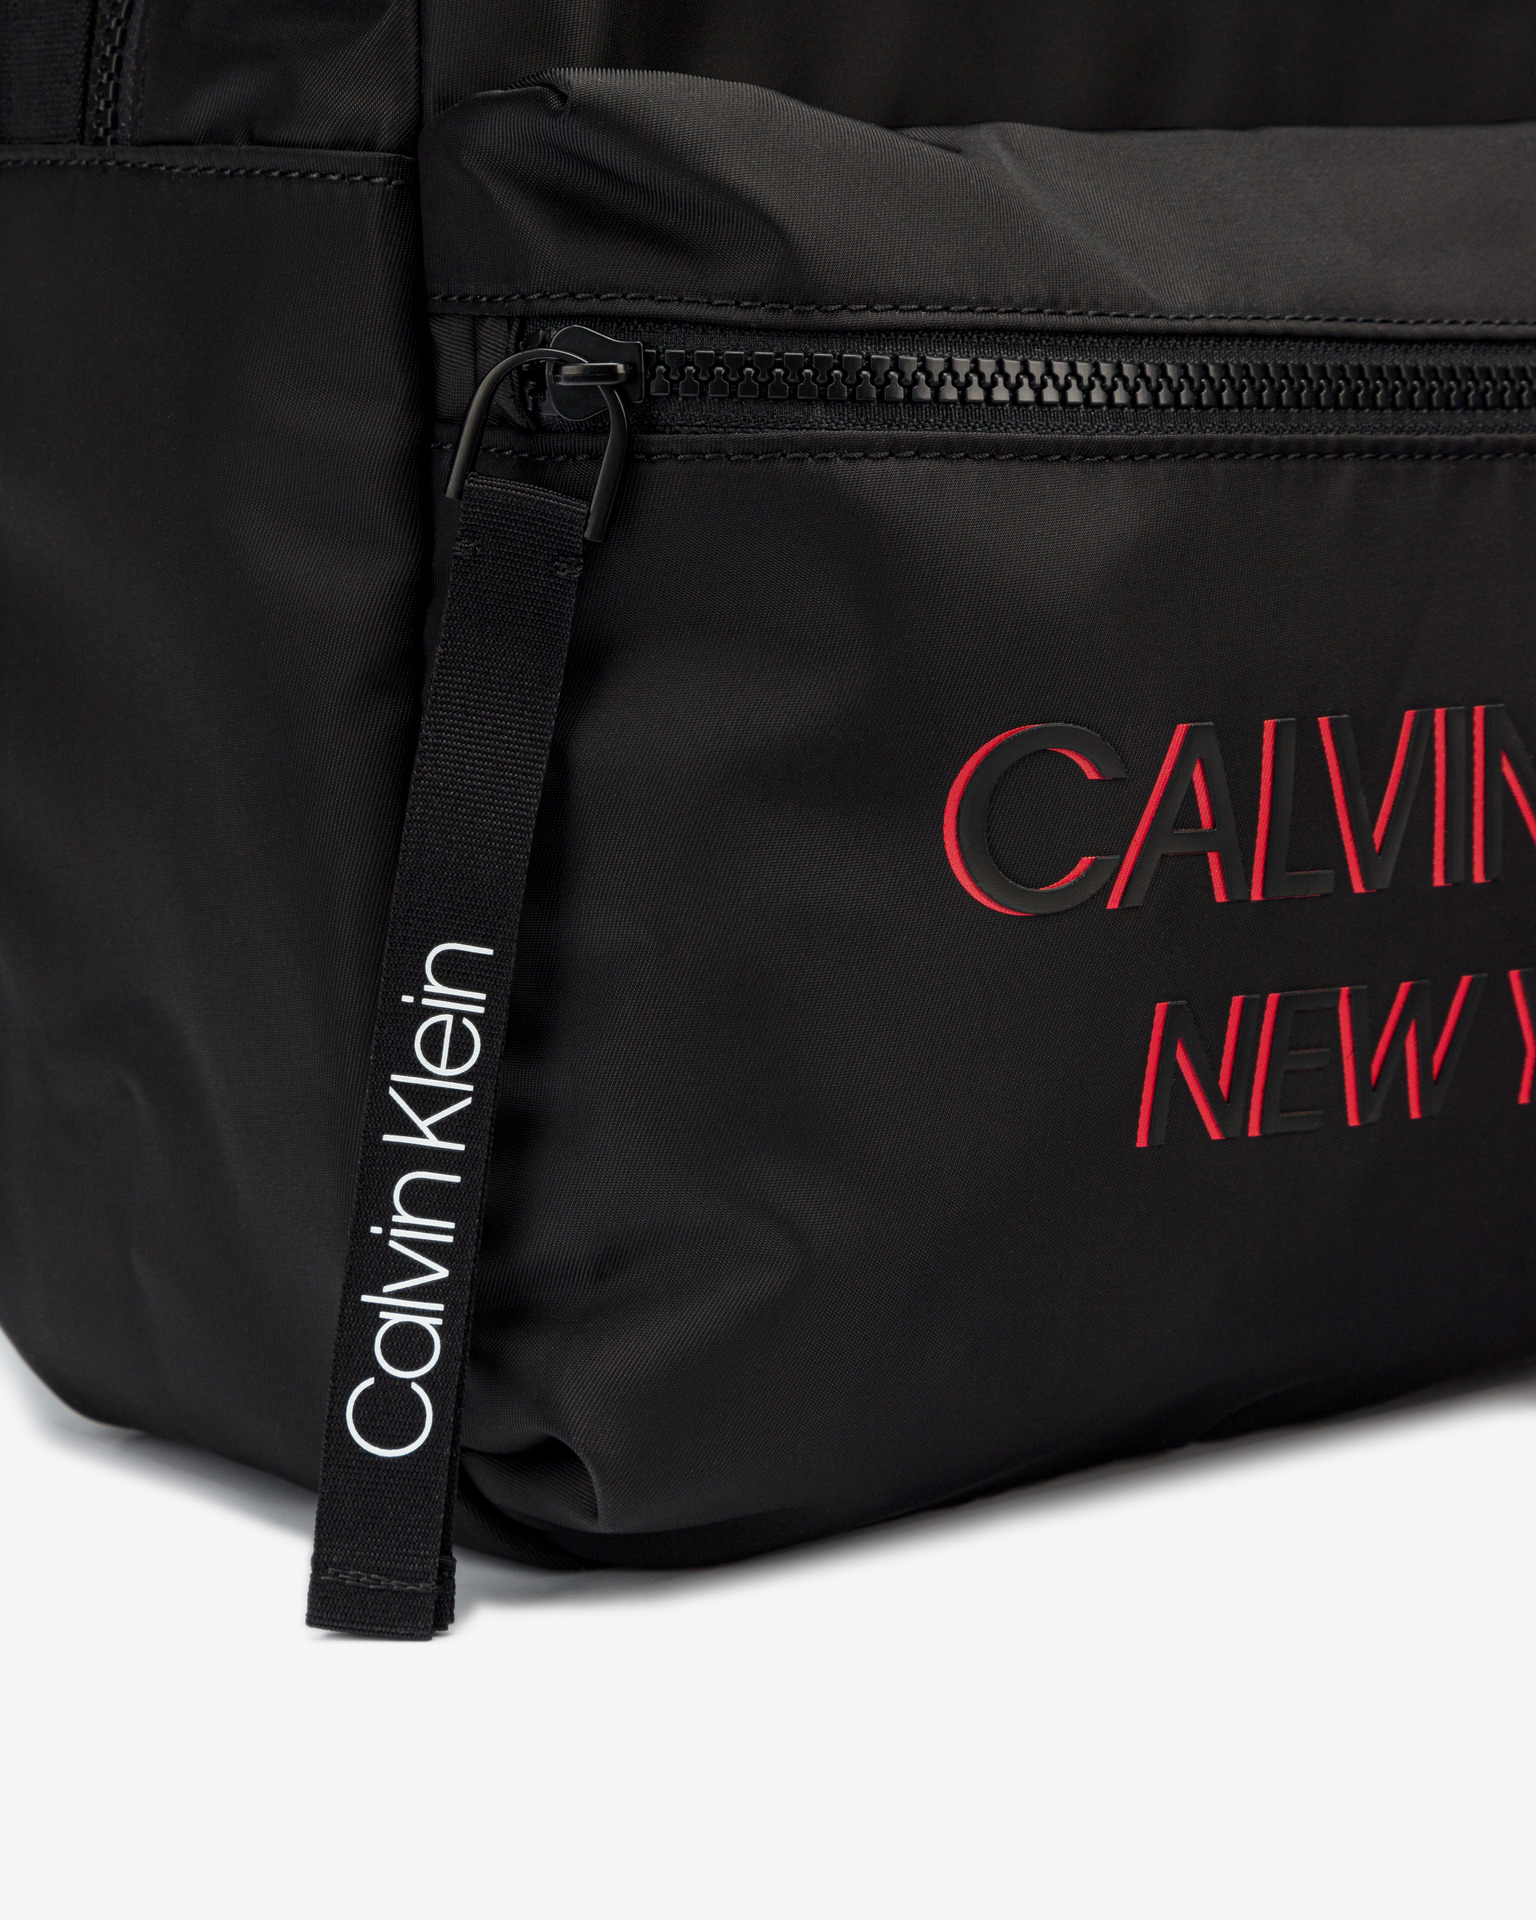 Calvin Klein Backpack - Campus backpack - Black - K50K506483 - BNWT